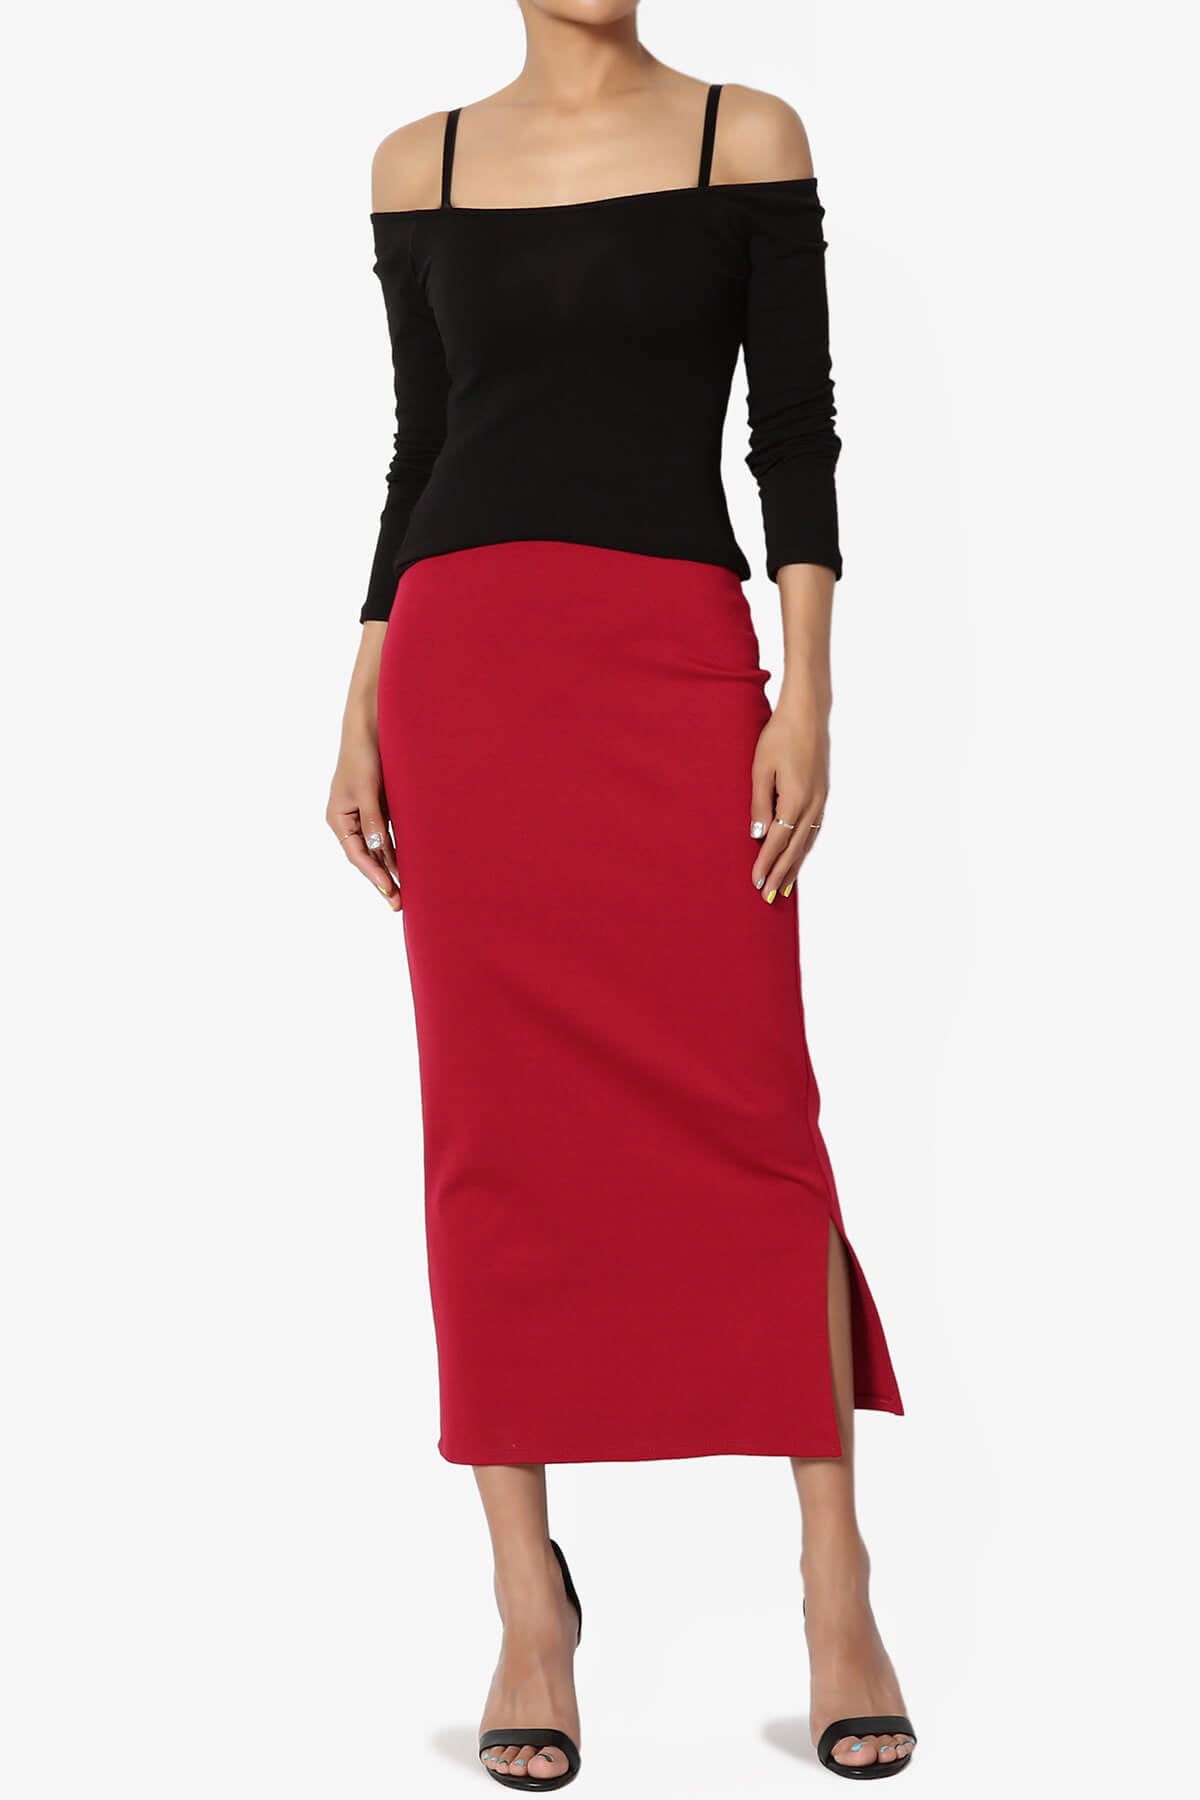 Carleta Mid Calf Pencil Skirt RED_6